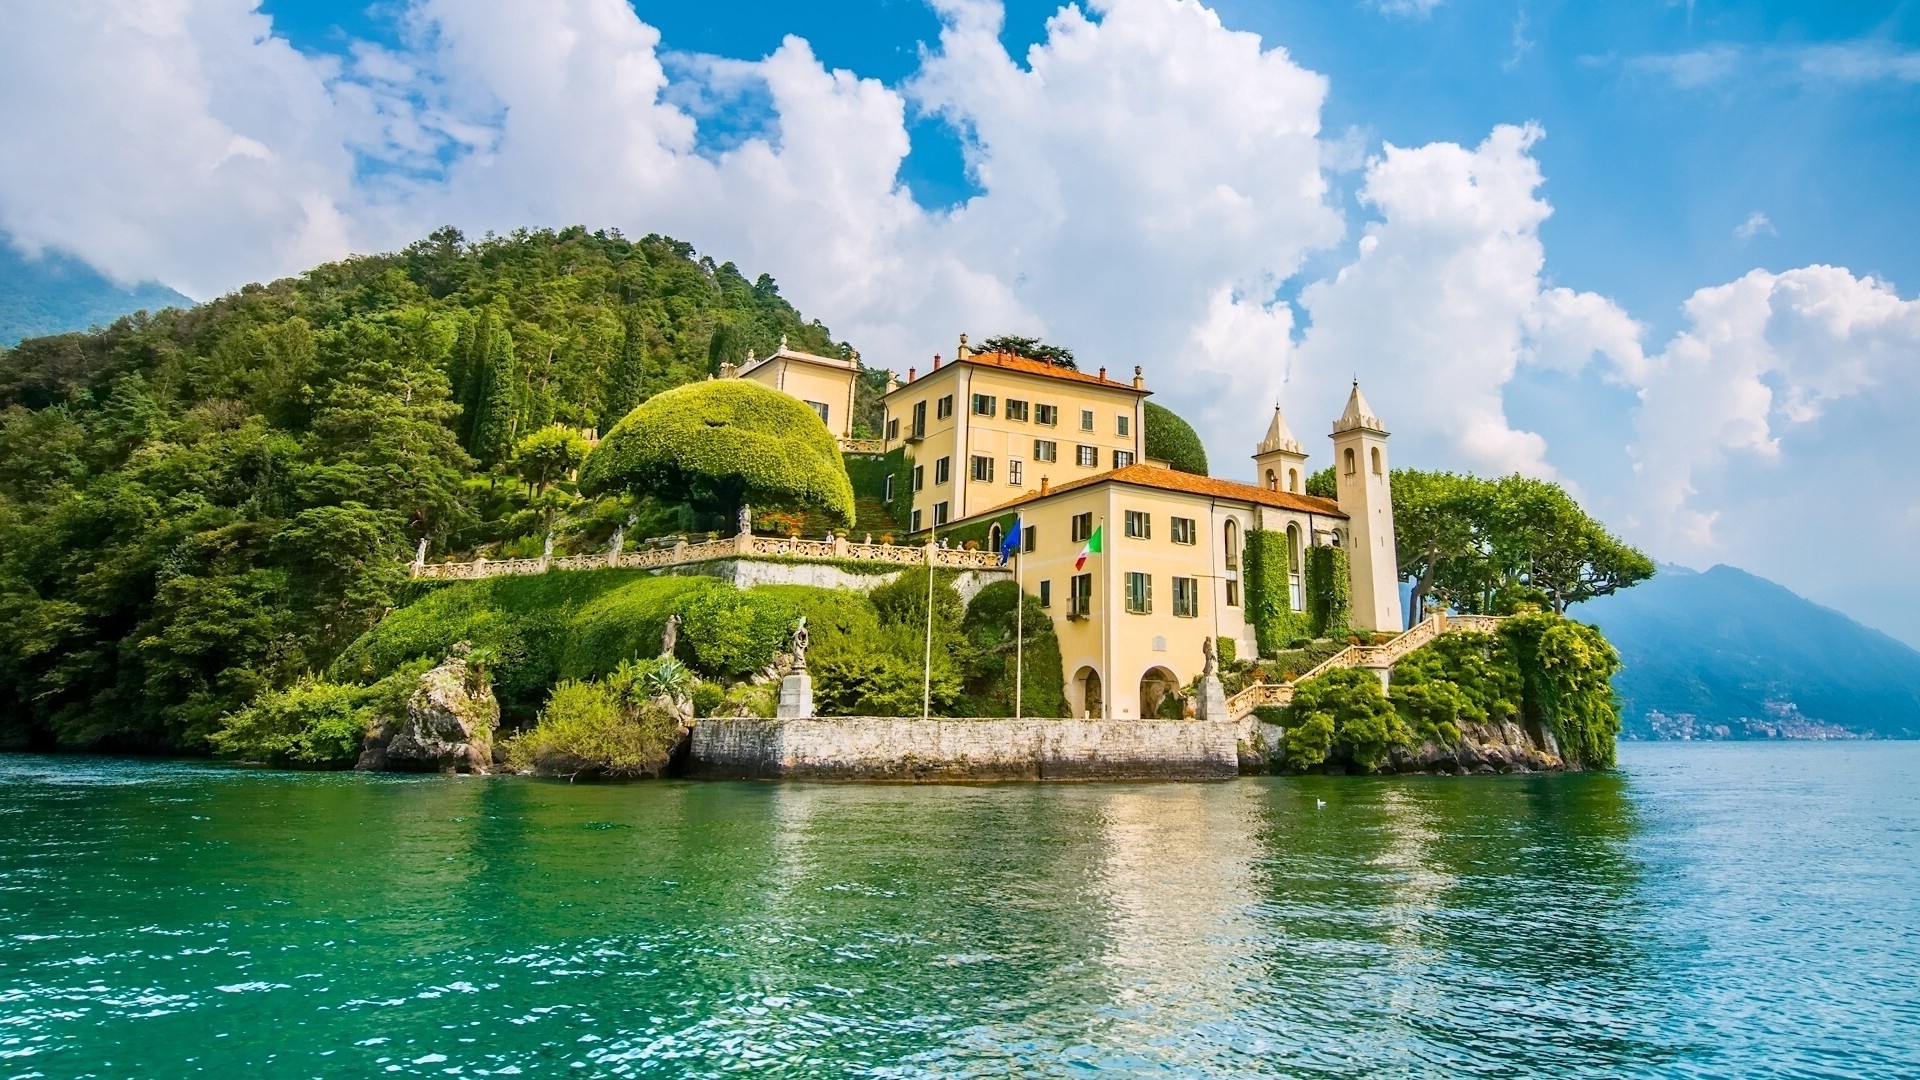 Lake Como, Villa Balbianello, Italian elegance, Lakeside paradise, 1920x1080 Full HD Desktop